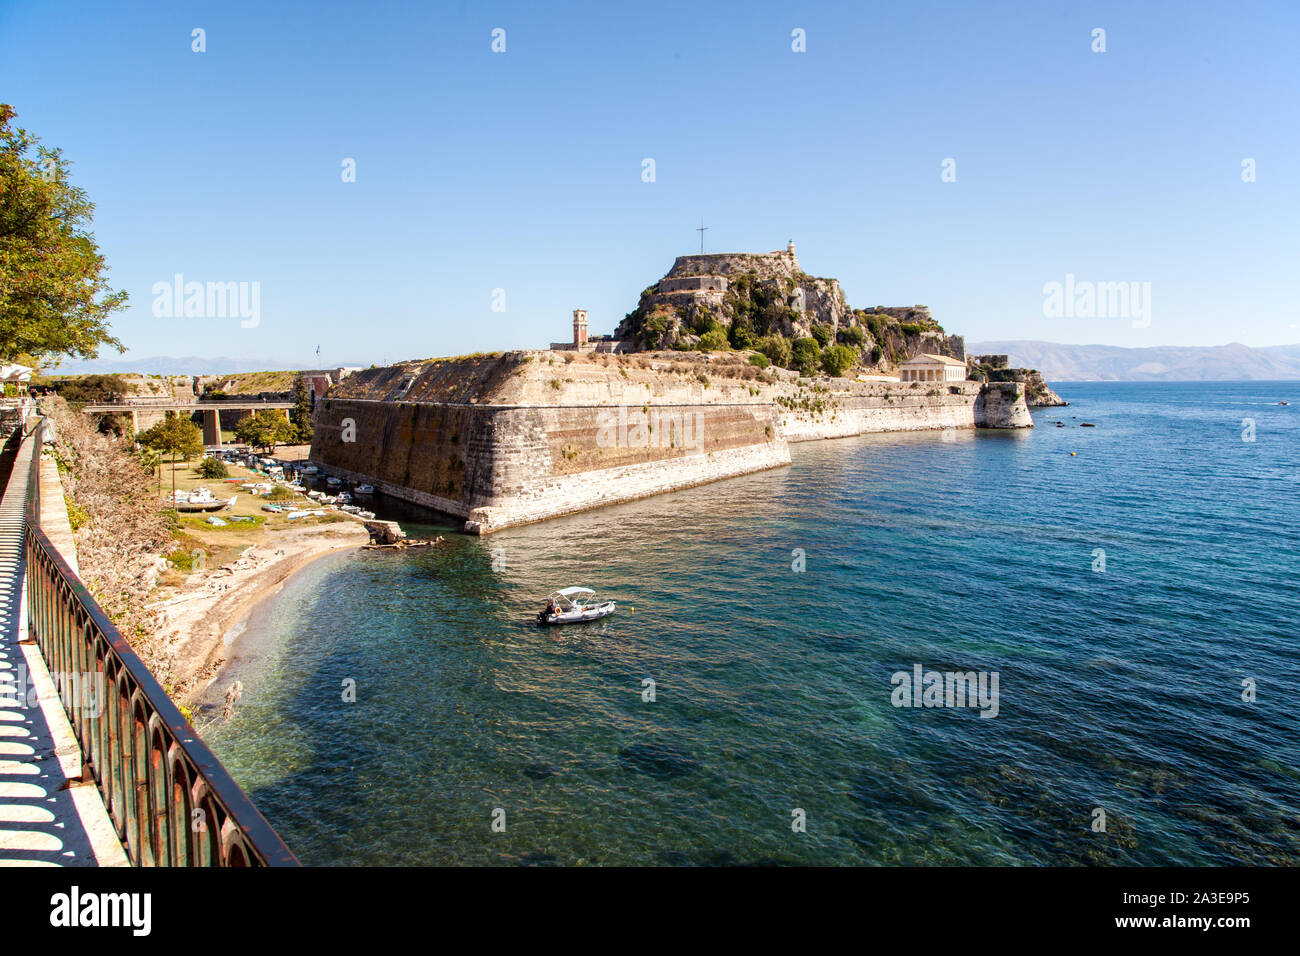 The old Venetian fortress on the Greek Island of Corfu Greece Stock Photo